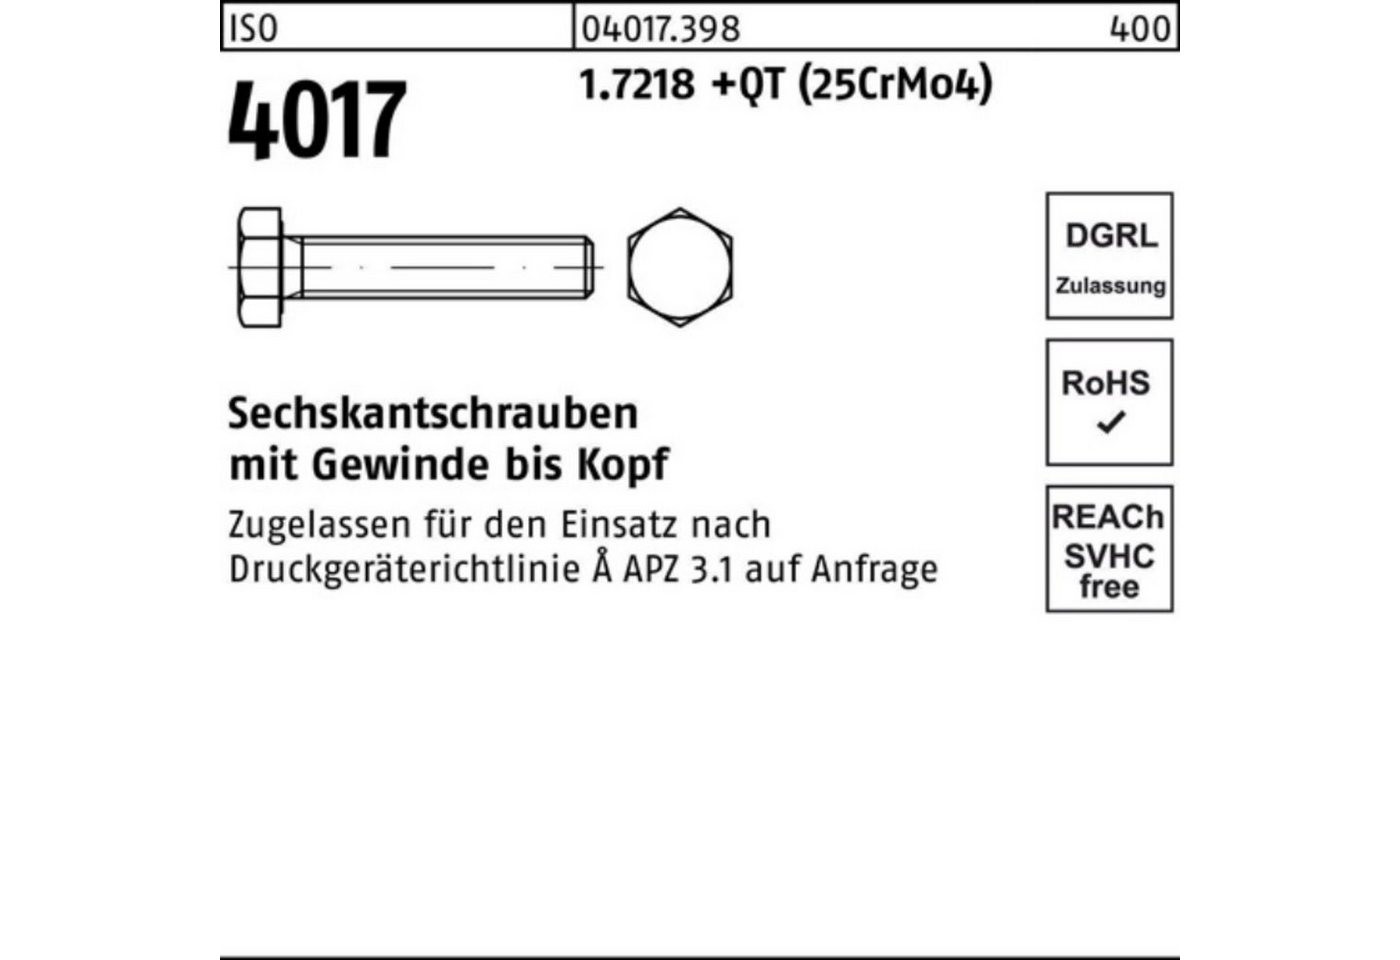 Bufab Sechskantschraube 100er Pack Sechskantschraube ISO 4017 VG M24x 60 1.7218 +QT (25CrMo4) von Bufab